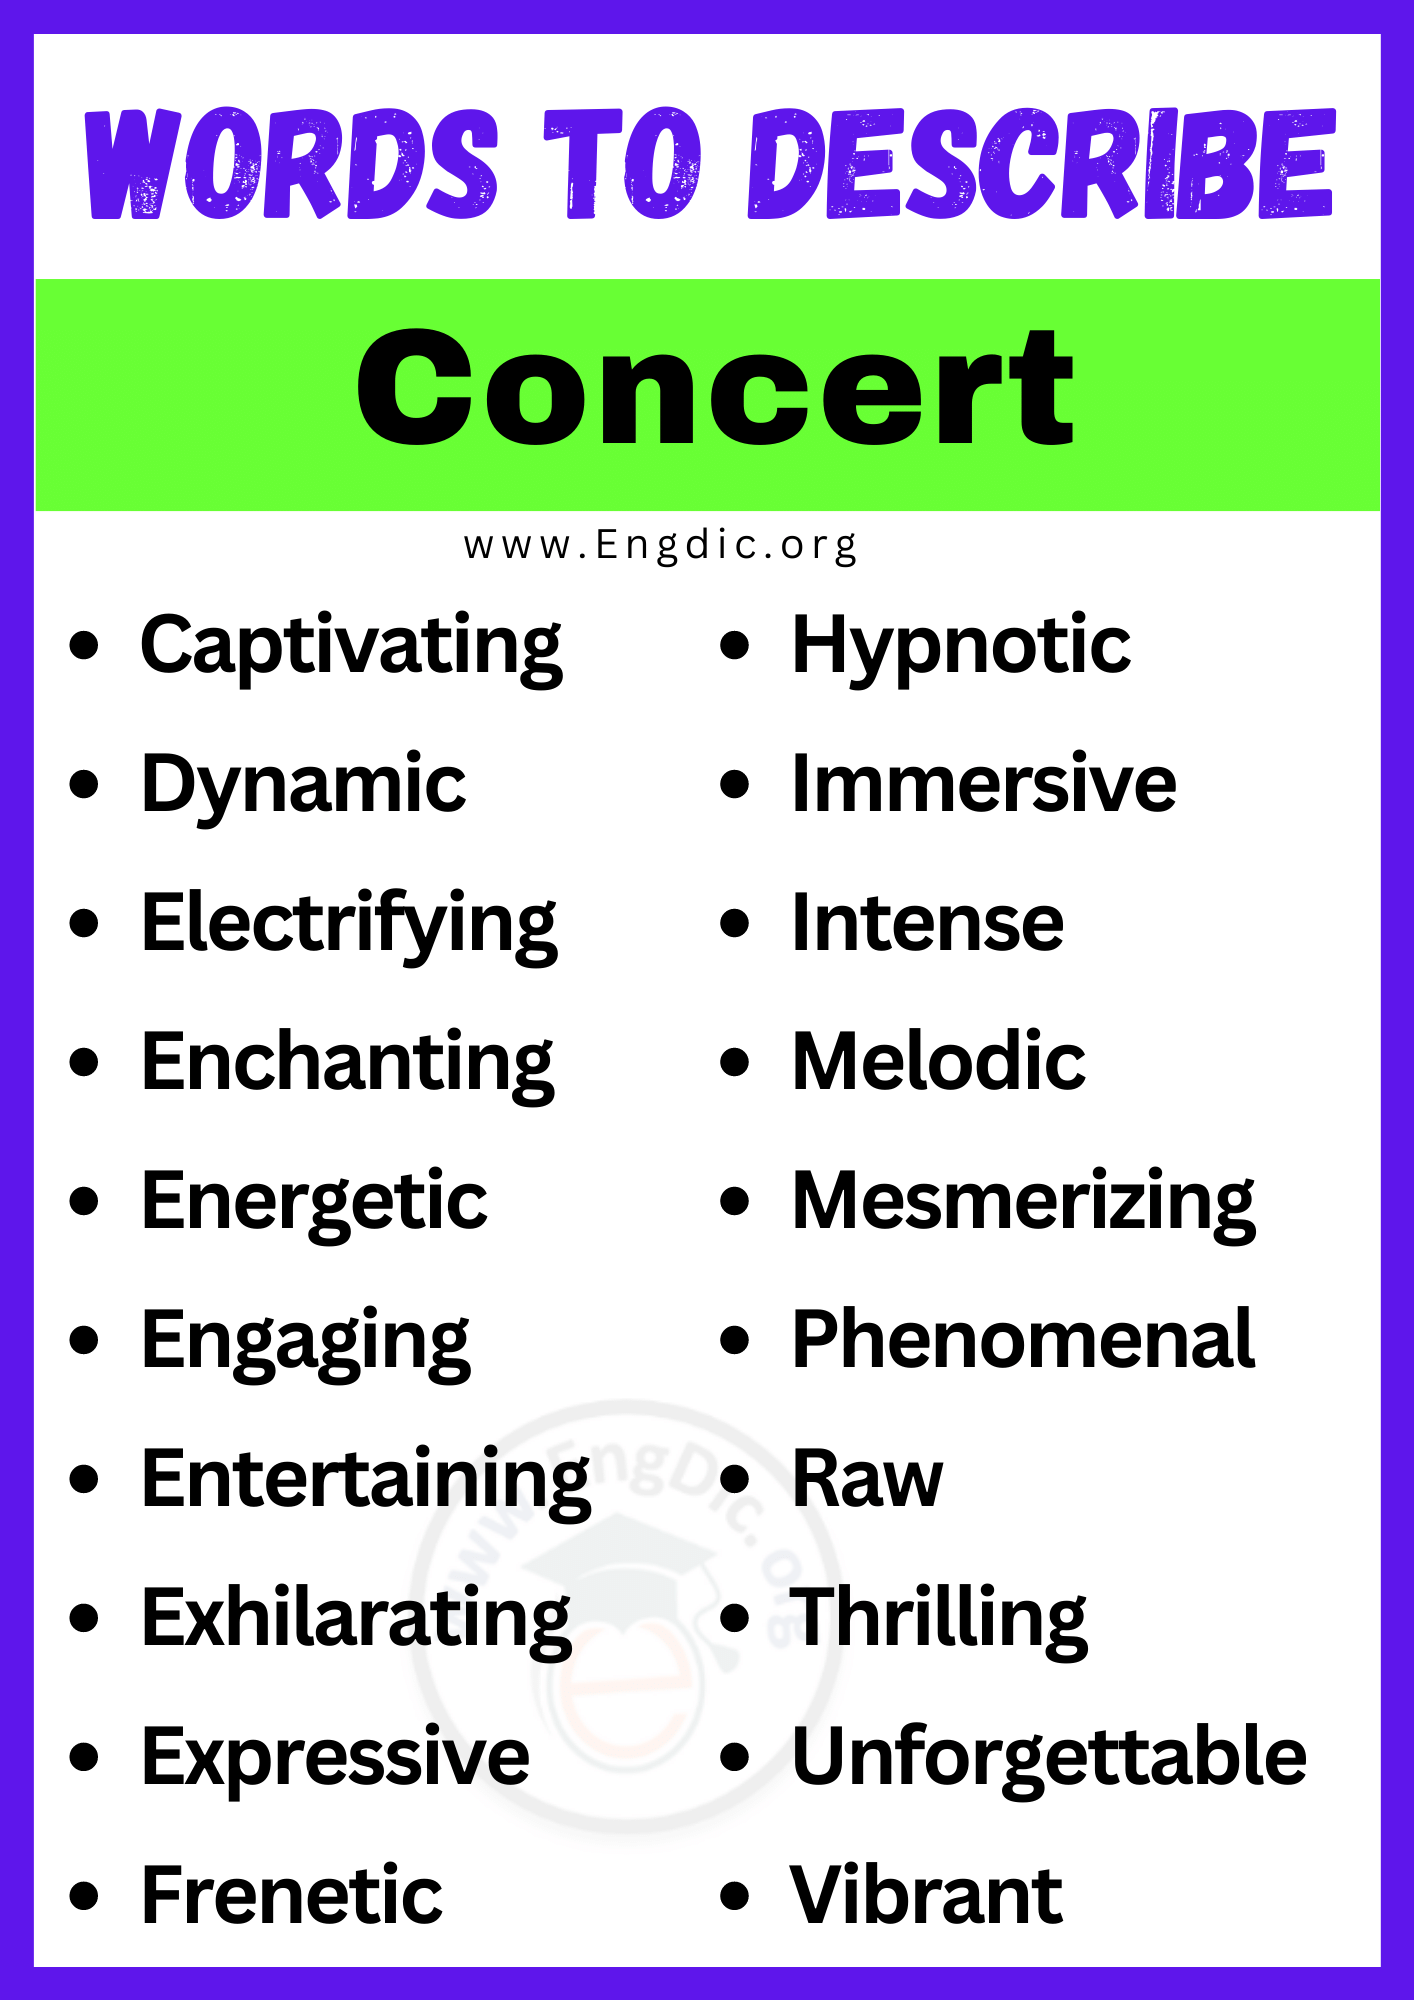 Words to Describe Concert